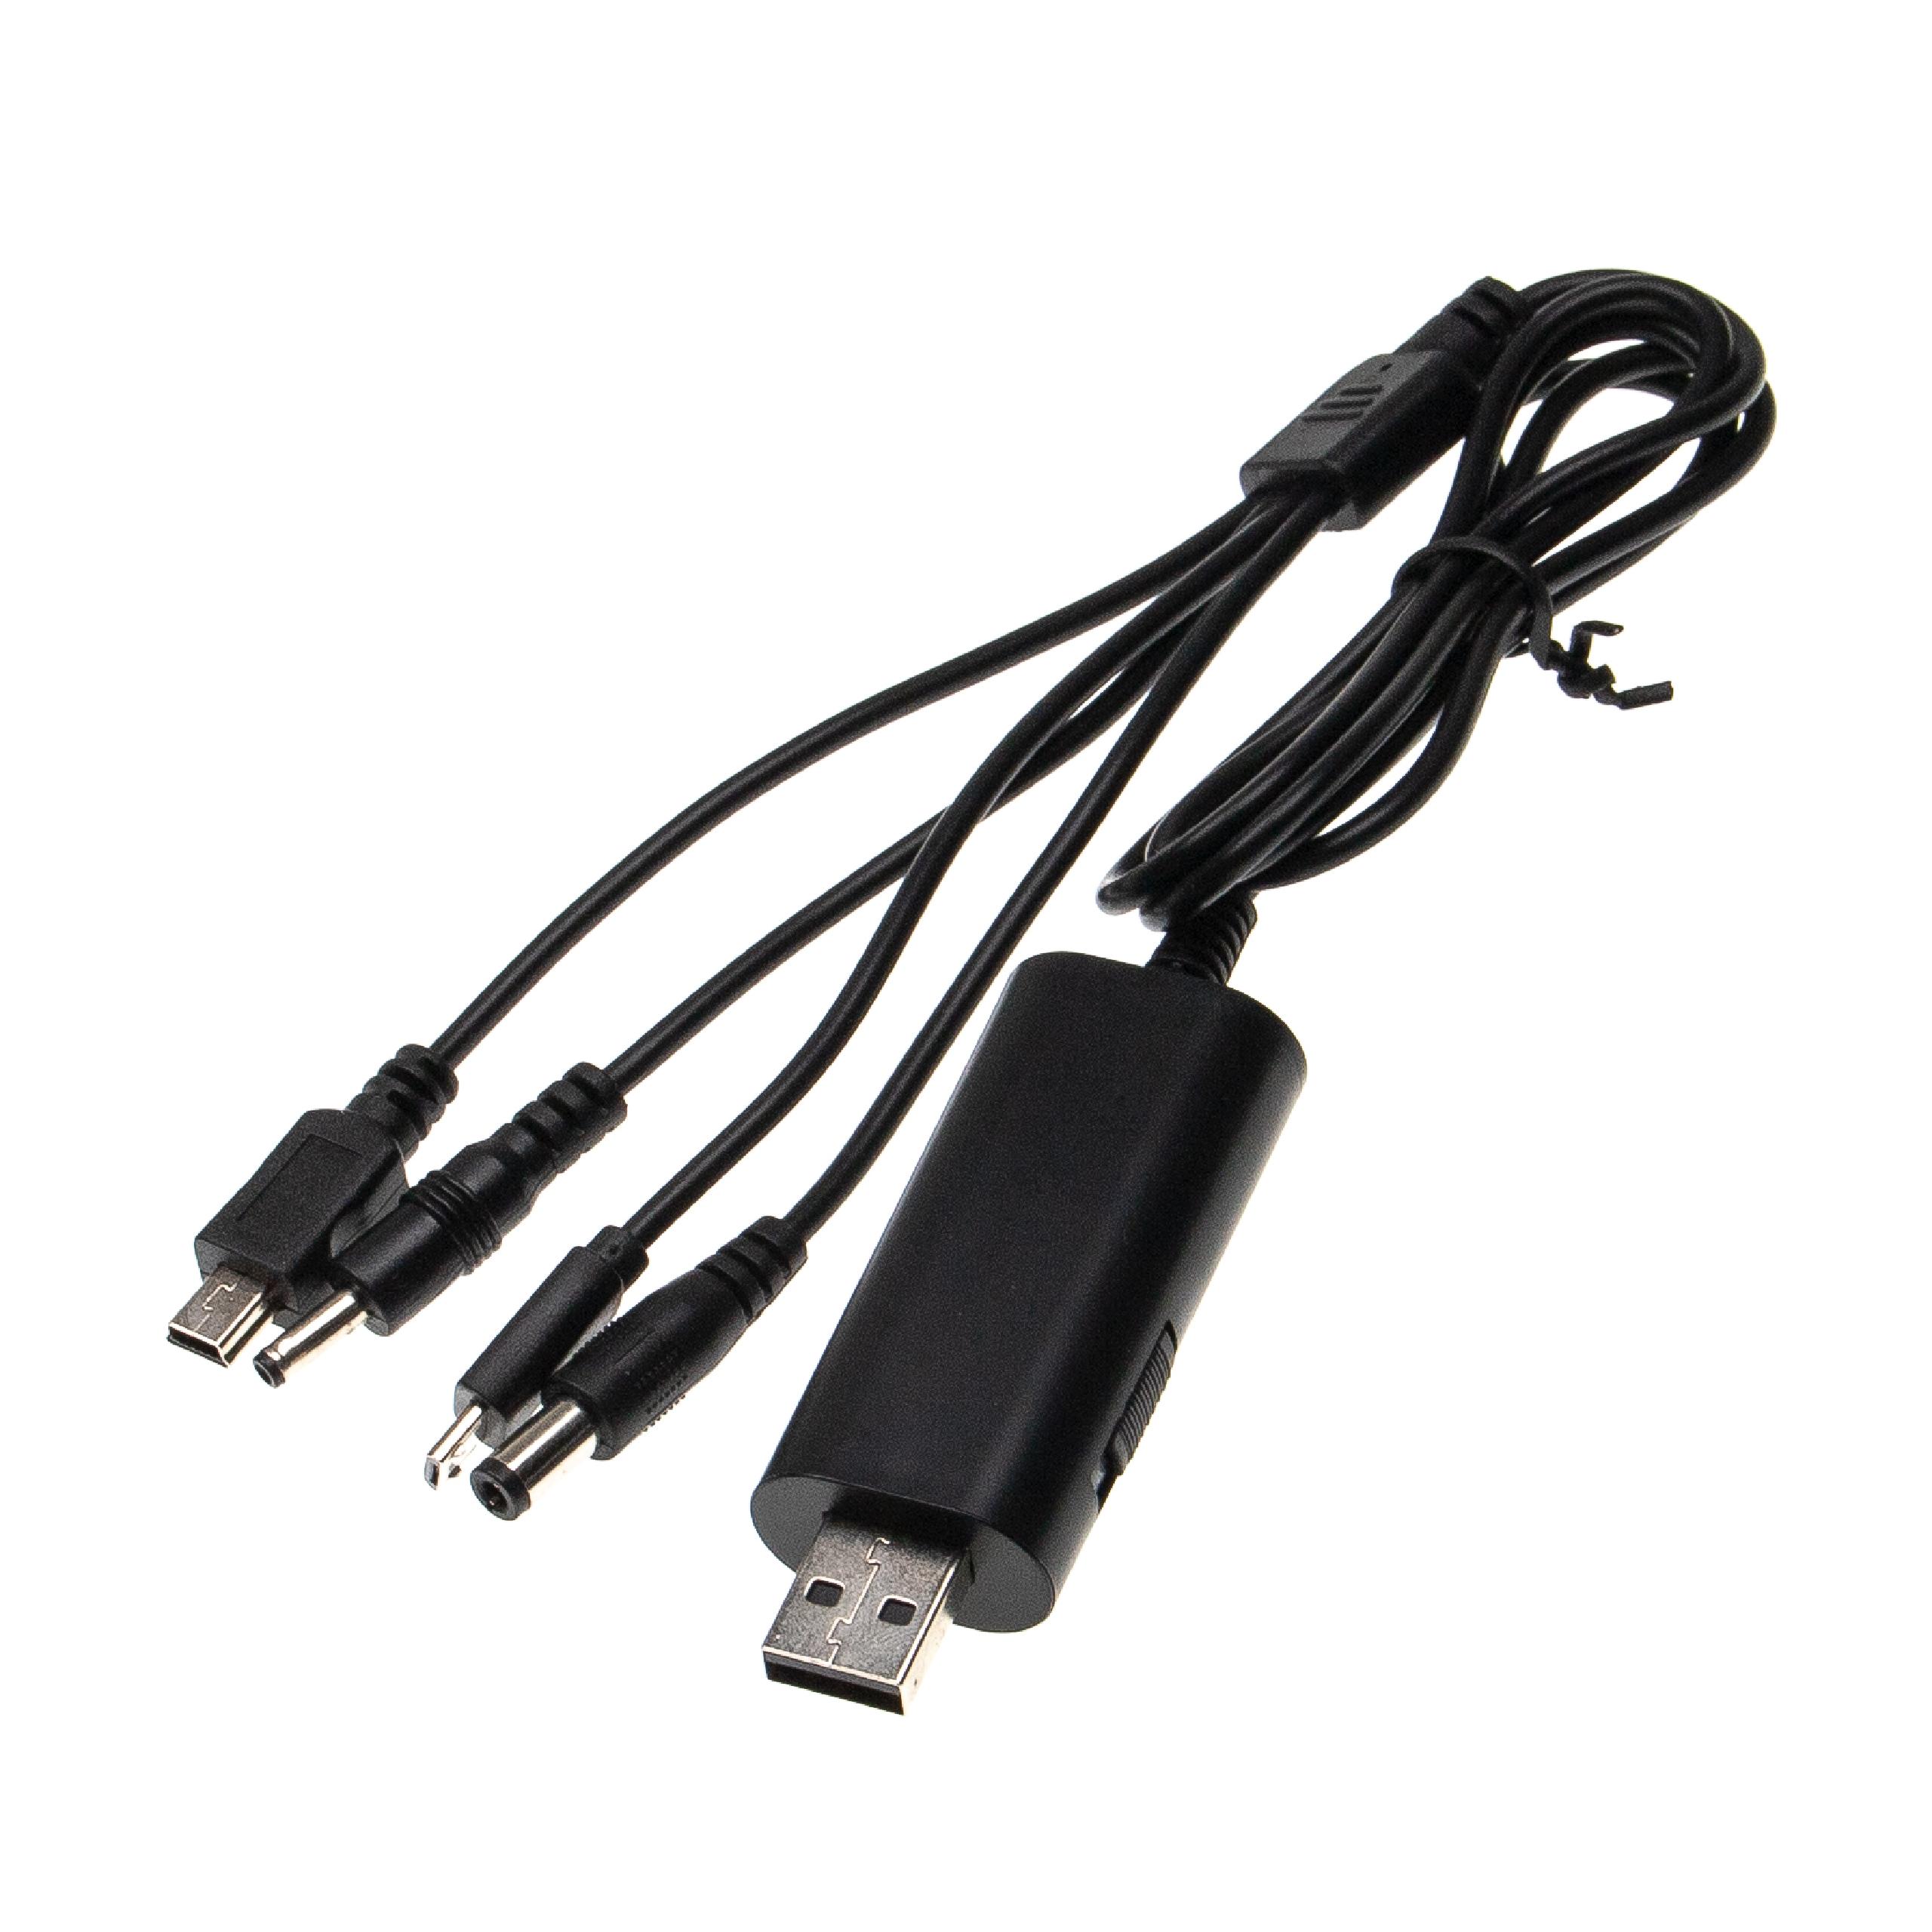 vhbw Universal Multi USB Kabel diverse Geräte z.B. Telefone, Handys, Smartphones - 4-in-1 Adapterkabel, 120 cm